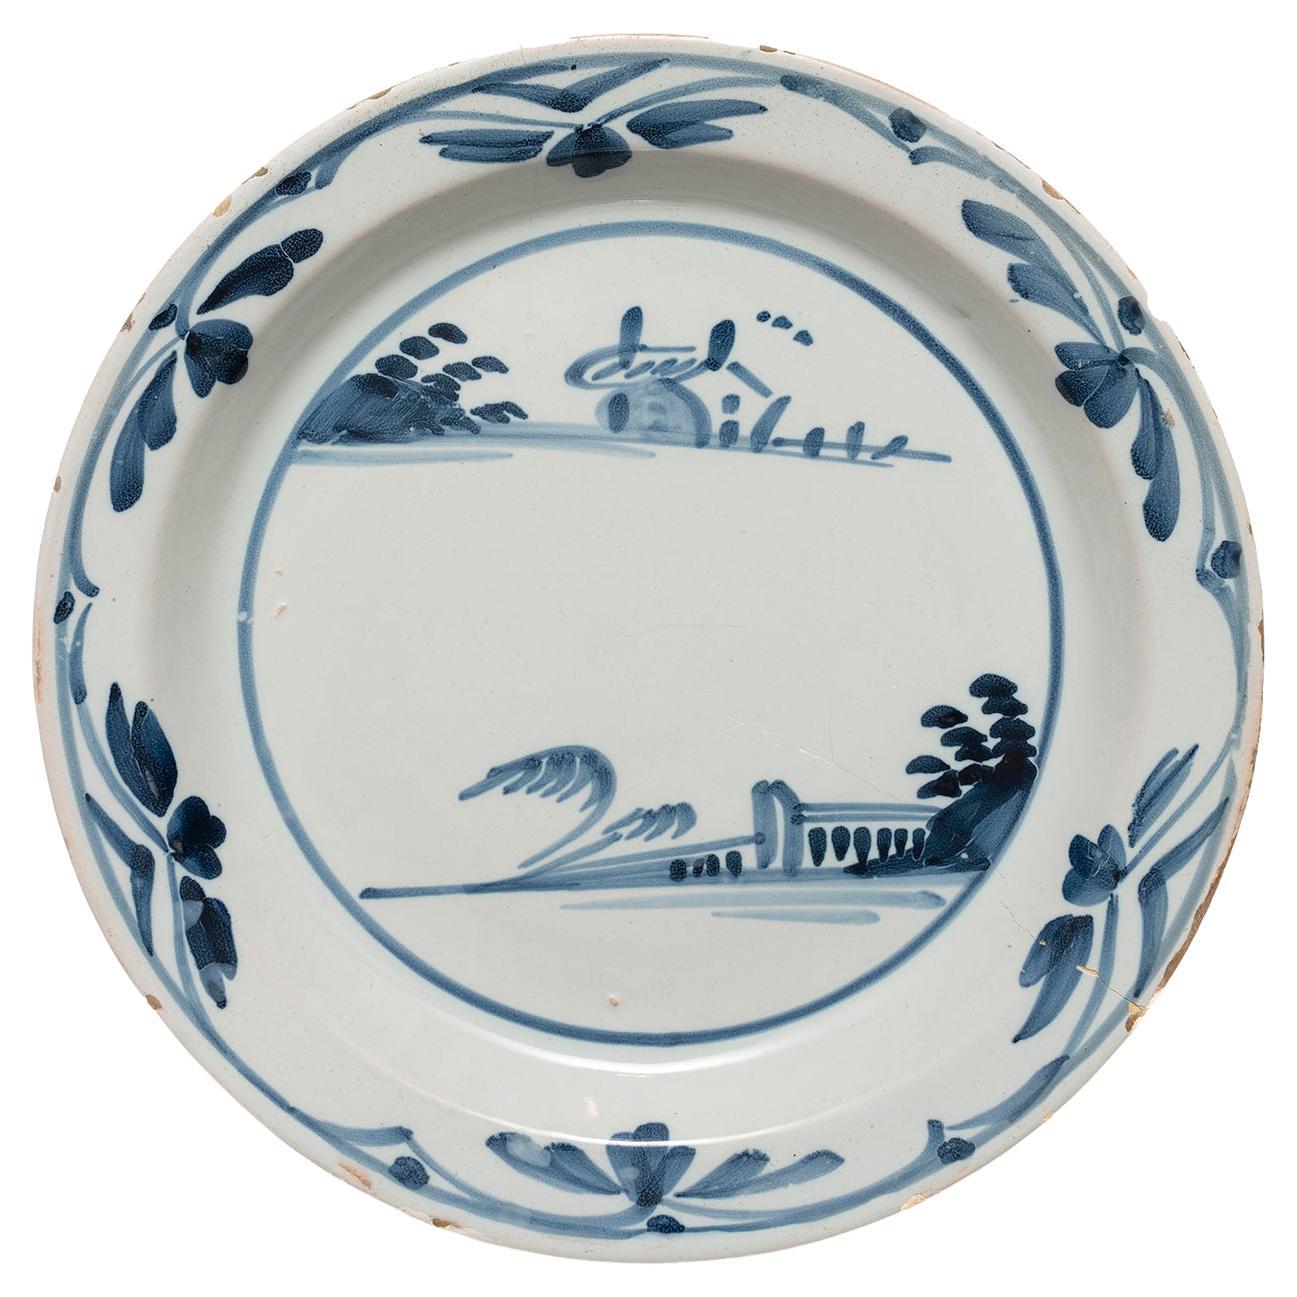 Plate delft London Chinoiserie landscape blue white pottery diameter 22.5cm 9"